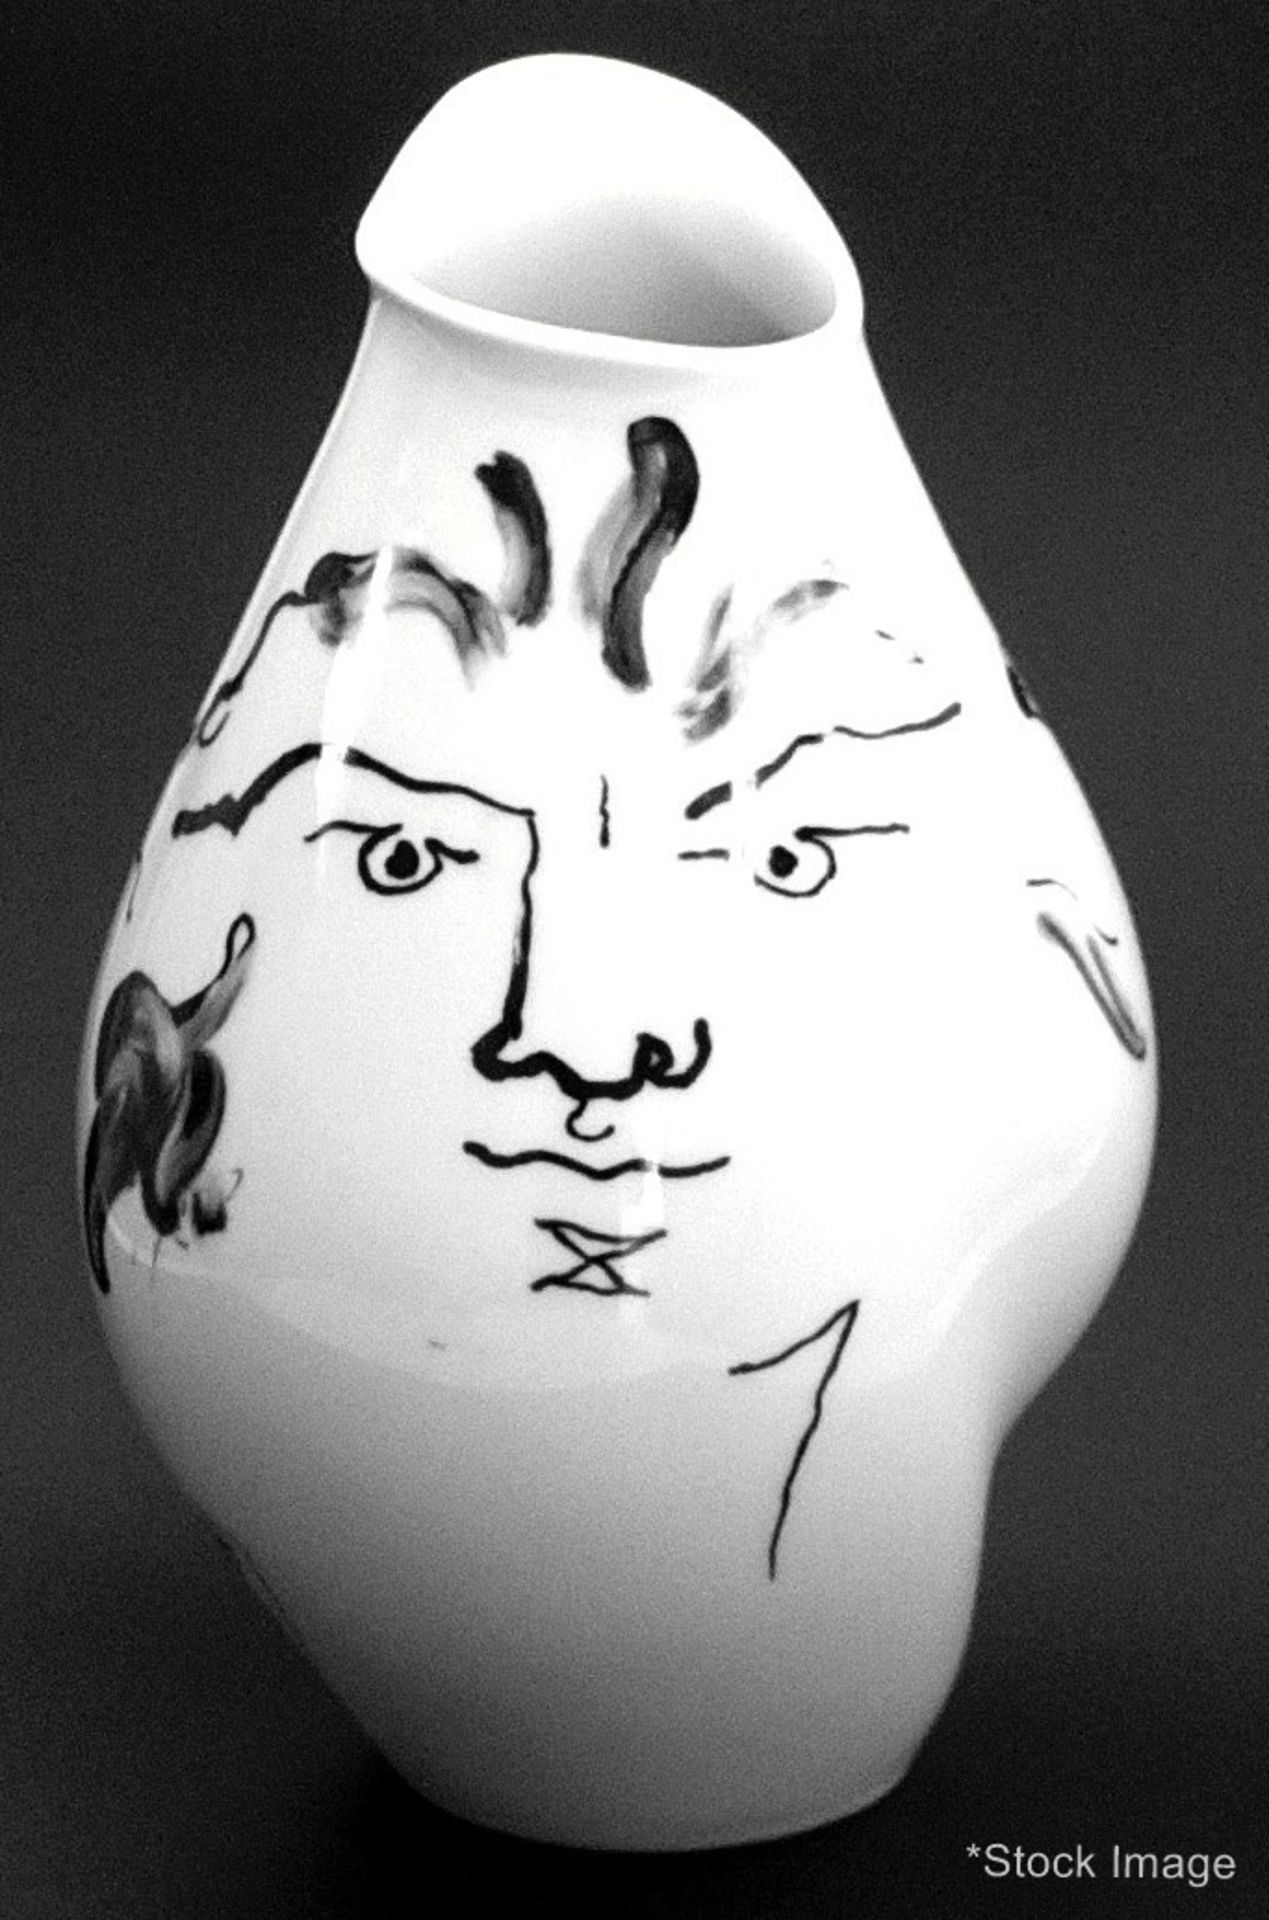 1 x JEAN COCTEAU / ROSENTHAL 'Tetes Face' Sculptural Glazed Porcelain Art Vase, 24cm - Circa 1970